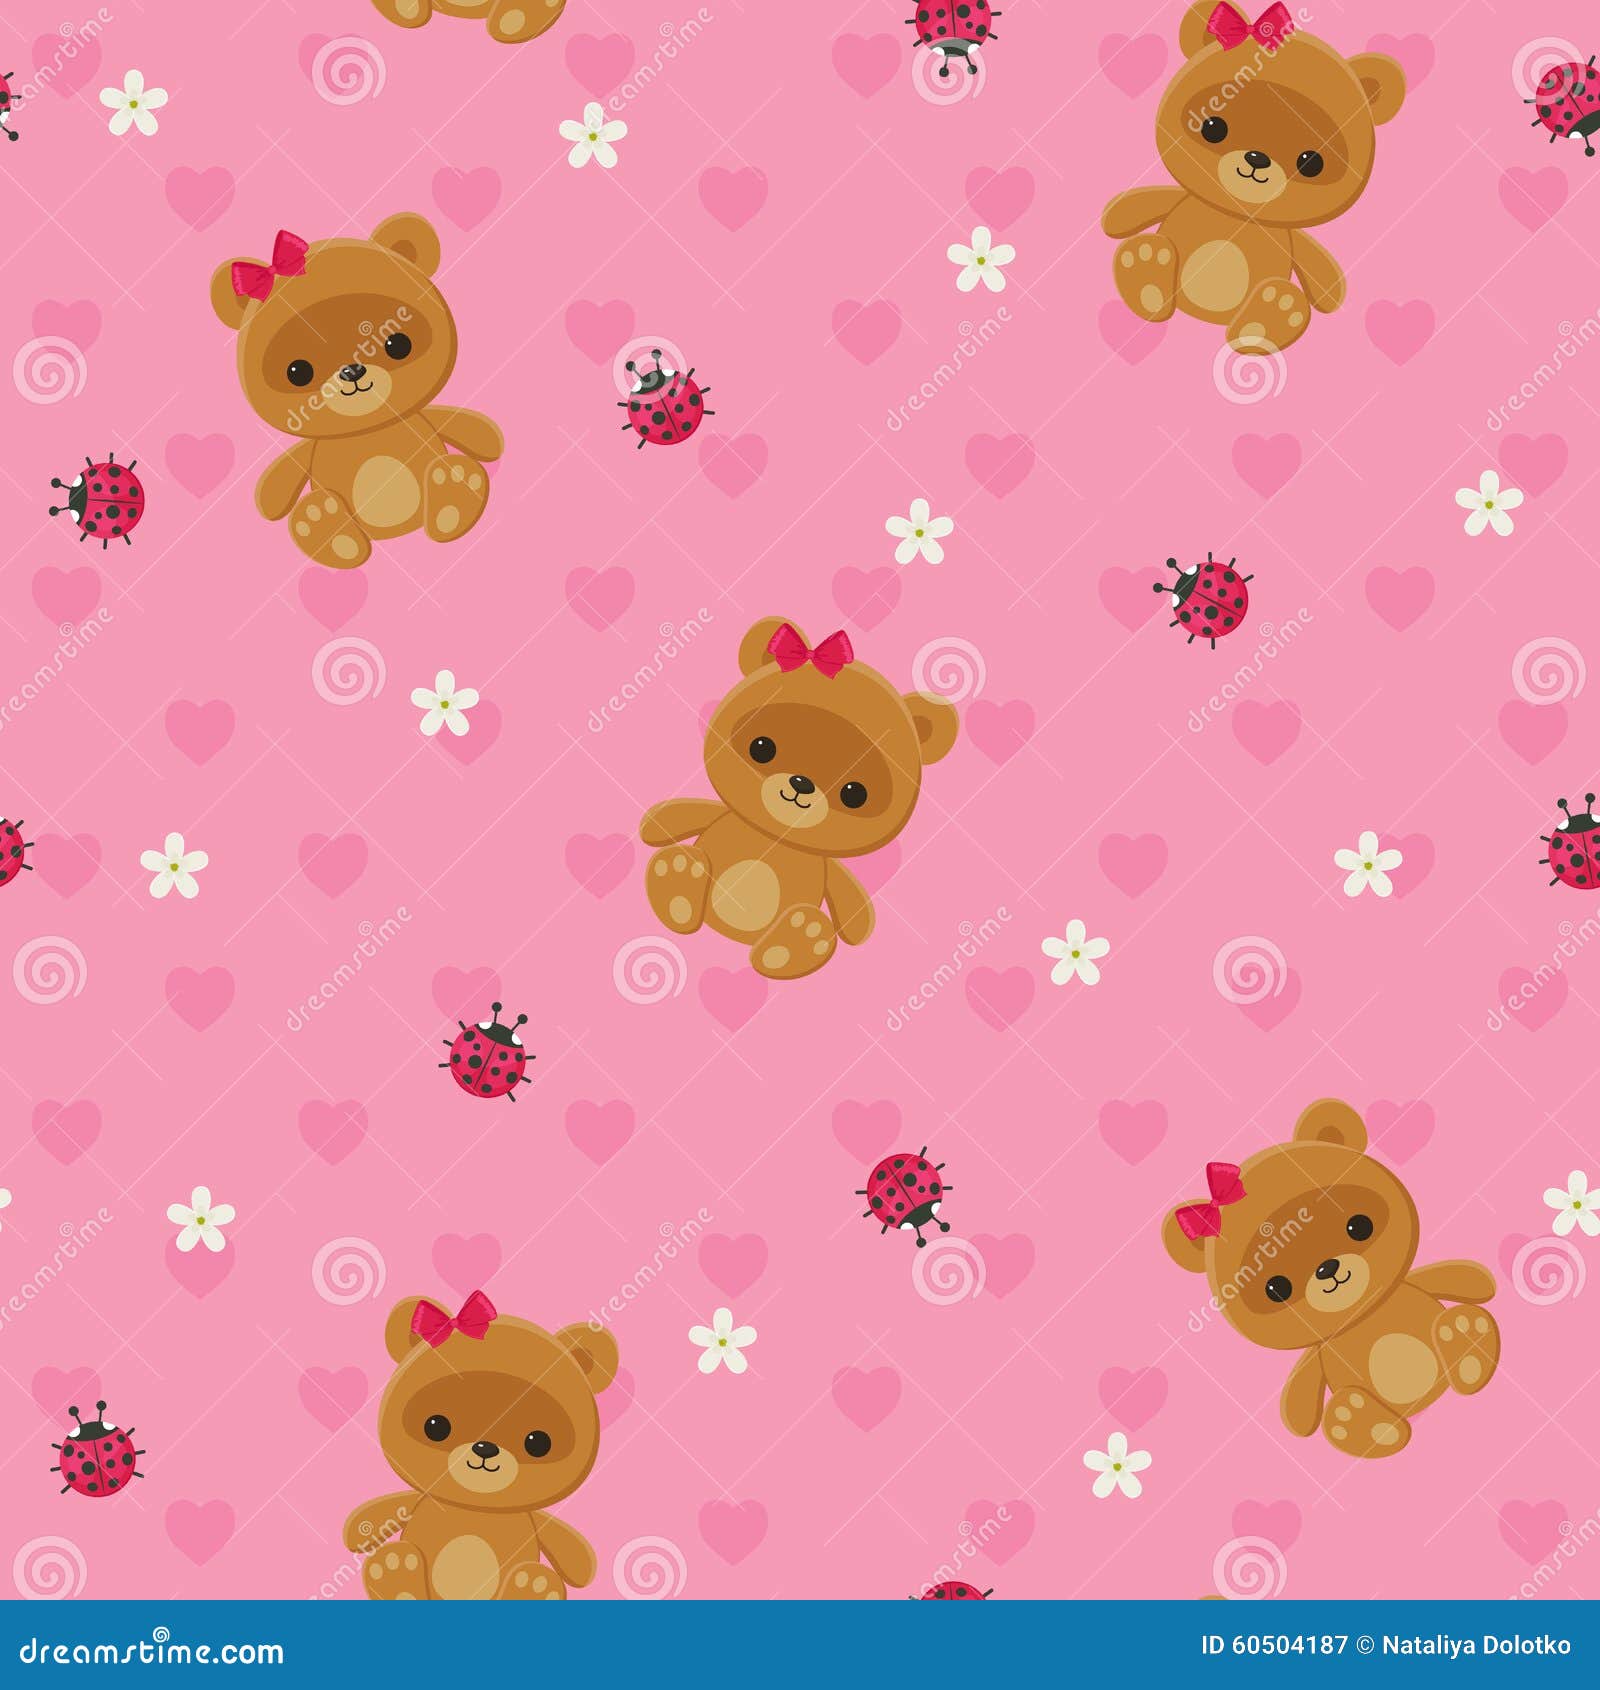 Teddy bear plush seamless pattern Royalty Free Vector Image